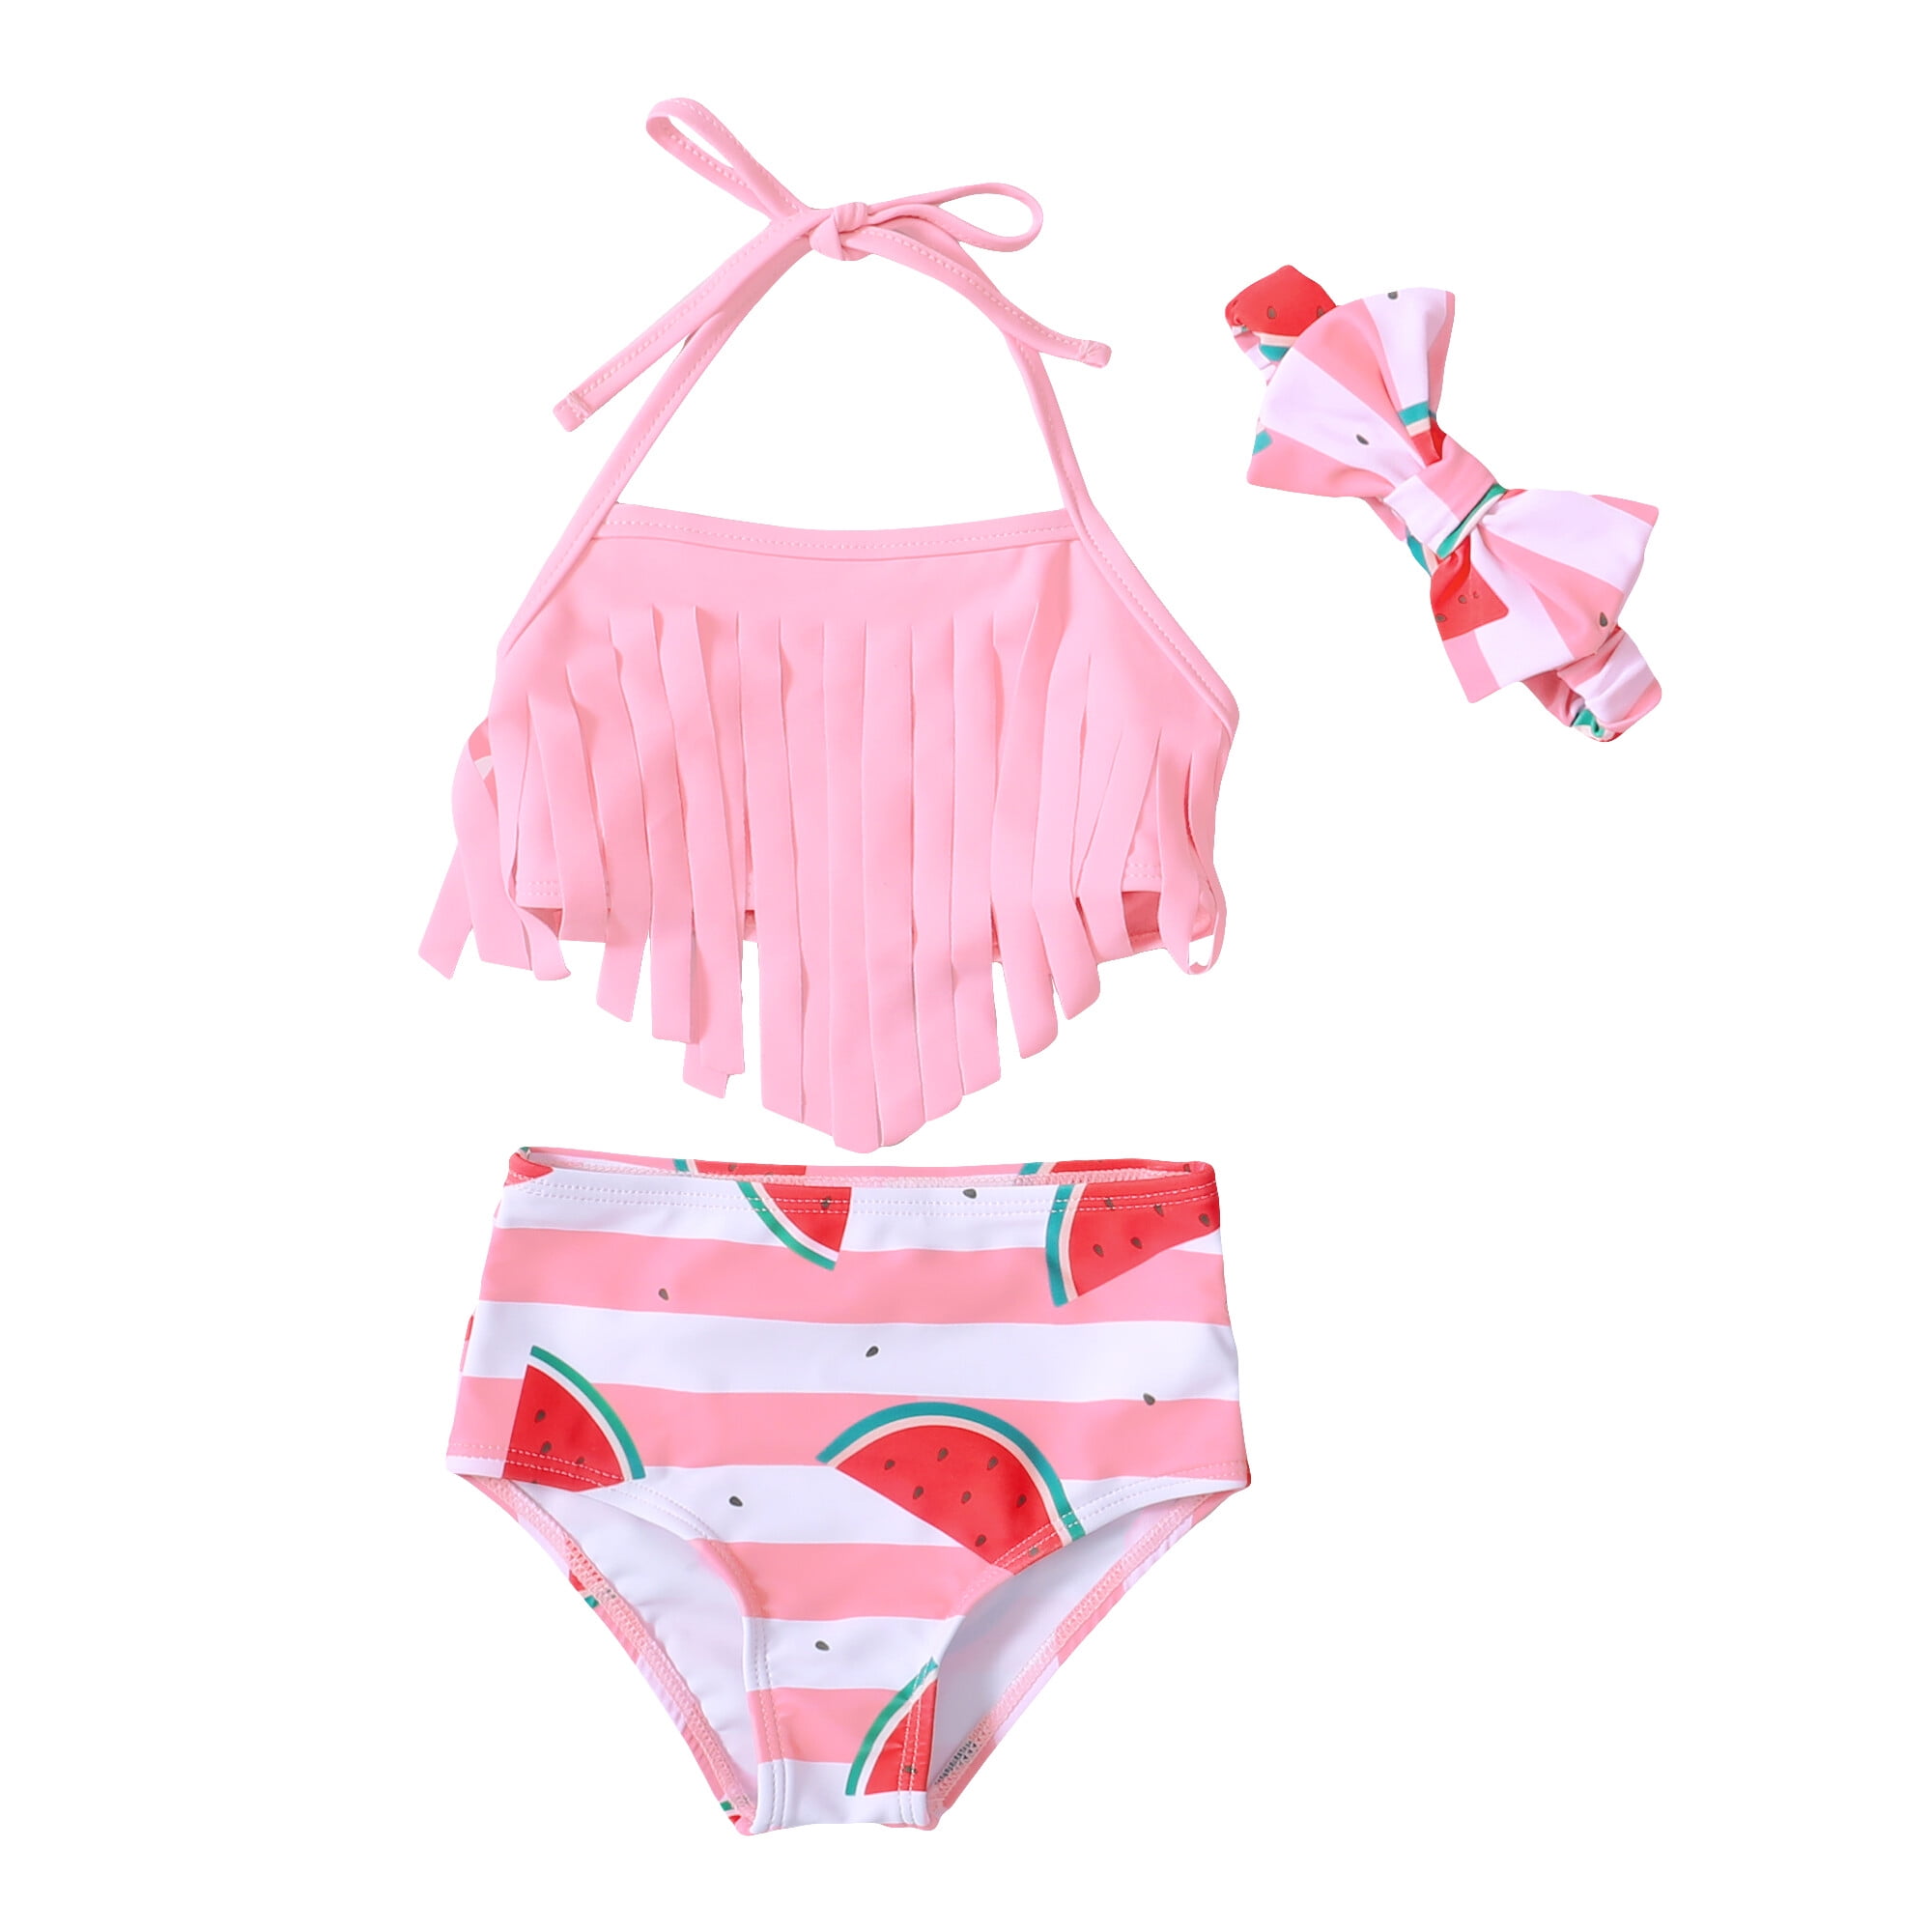 NEW Girls Parrot Pink Ruffle Swimsuit Bathing Suit 2T 3T 4T 5T 6 